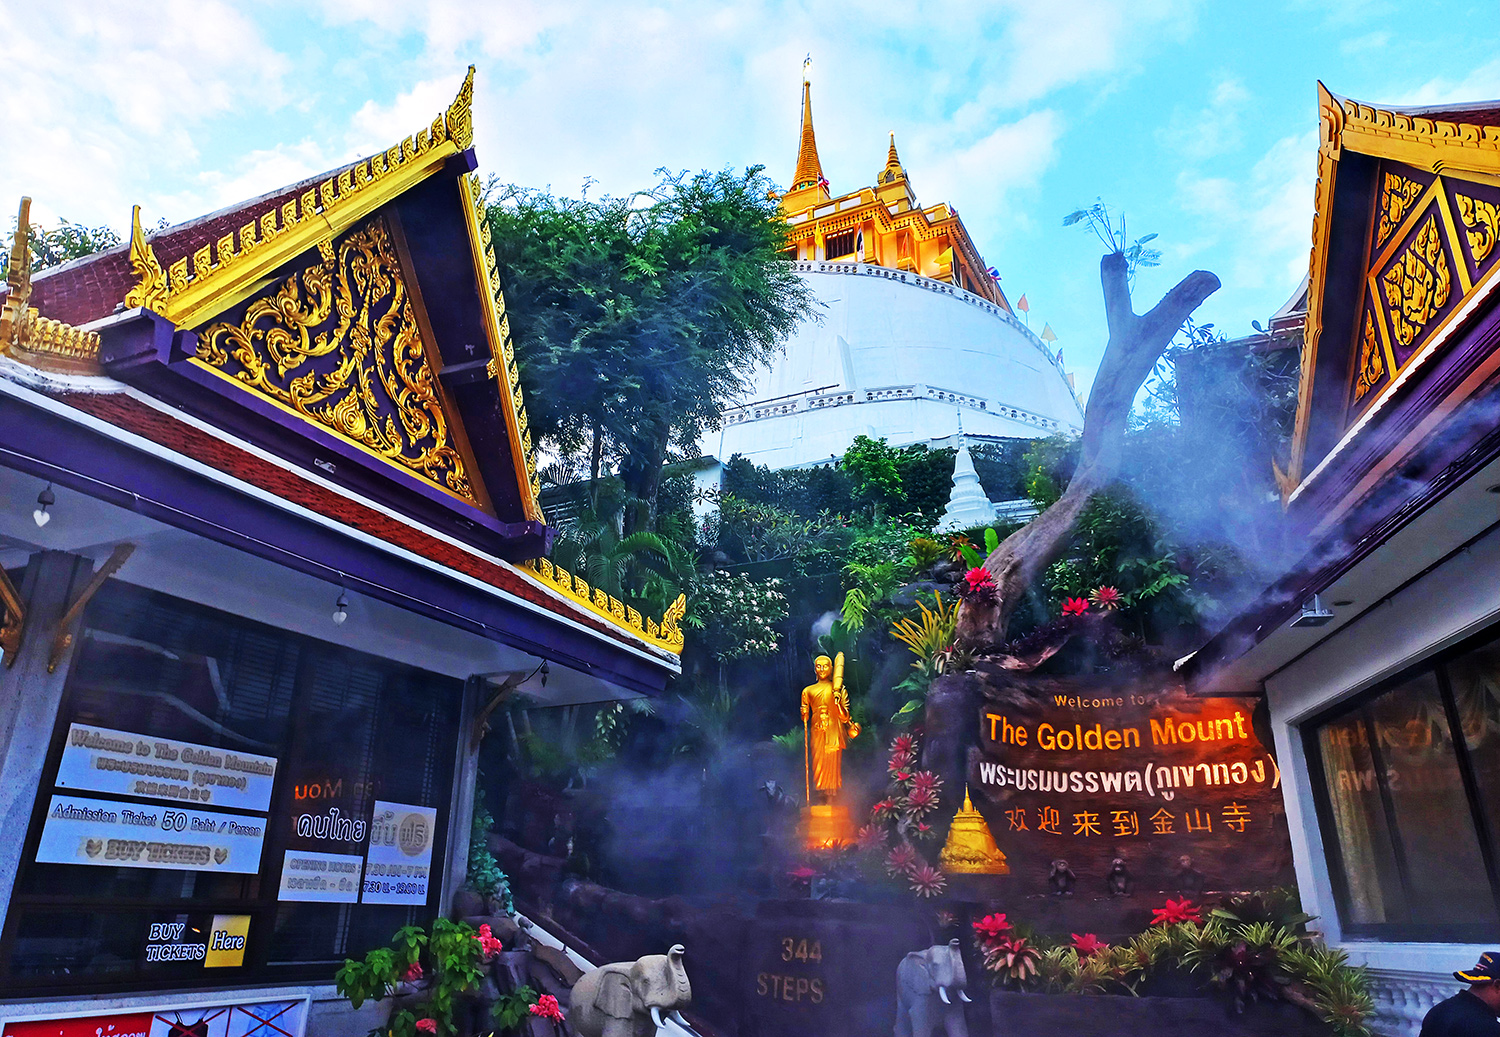 Bangkok: Golden Mountain temple, Tempio della Montagna Dorata, Wat Saket